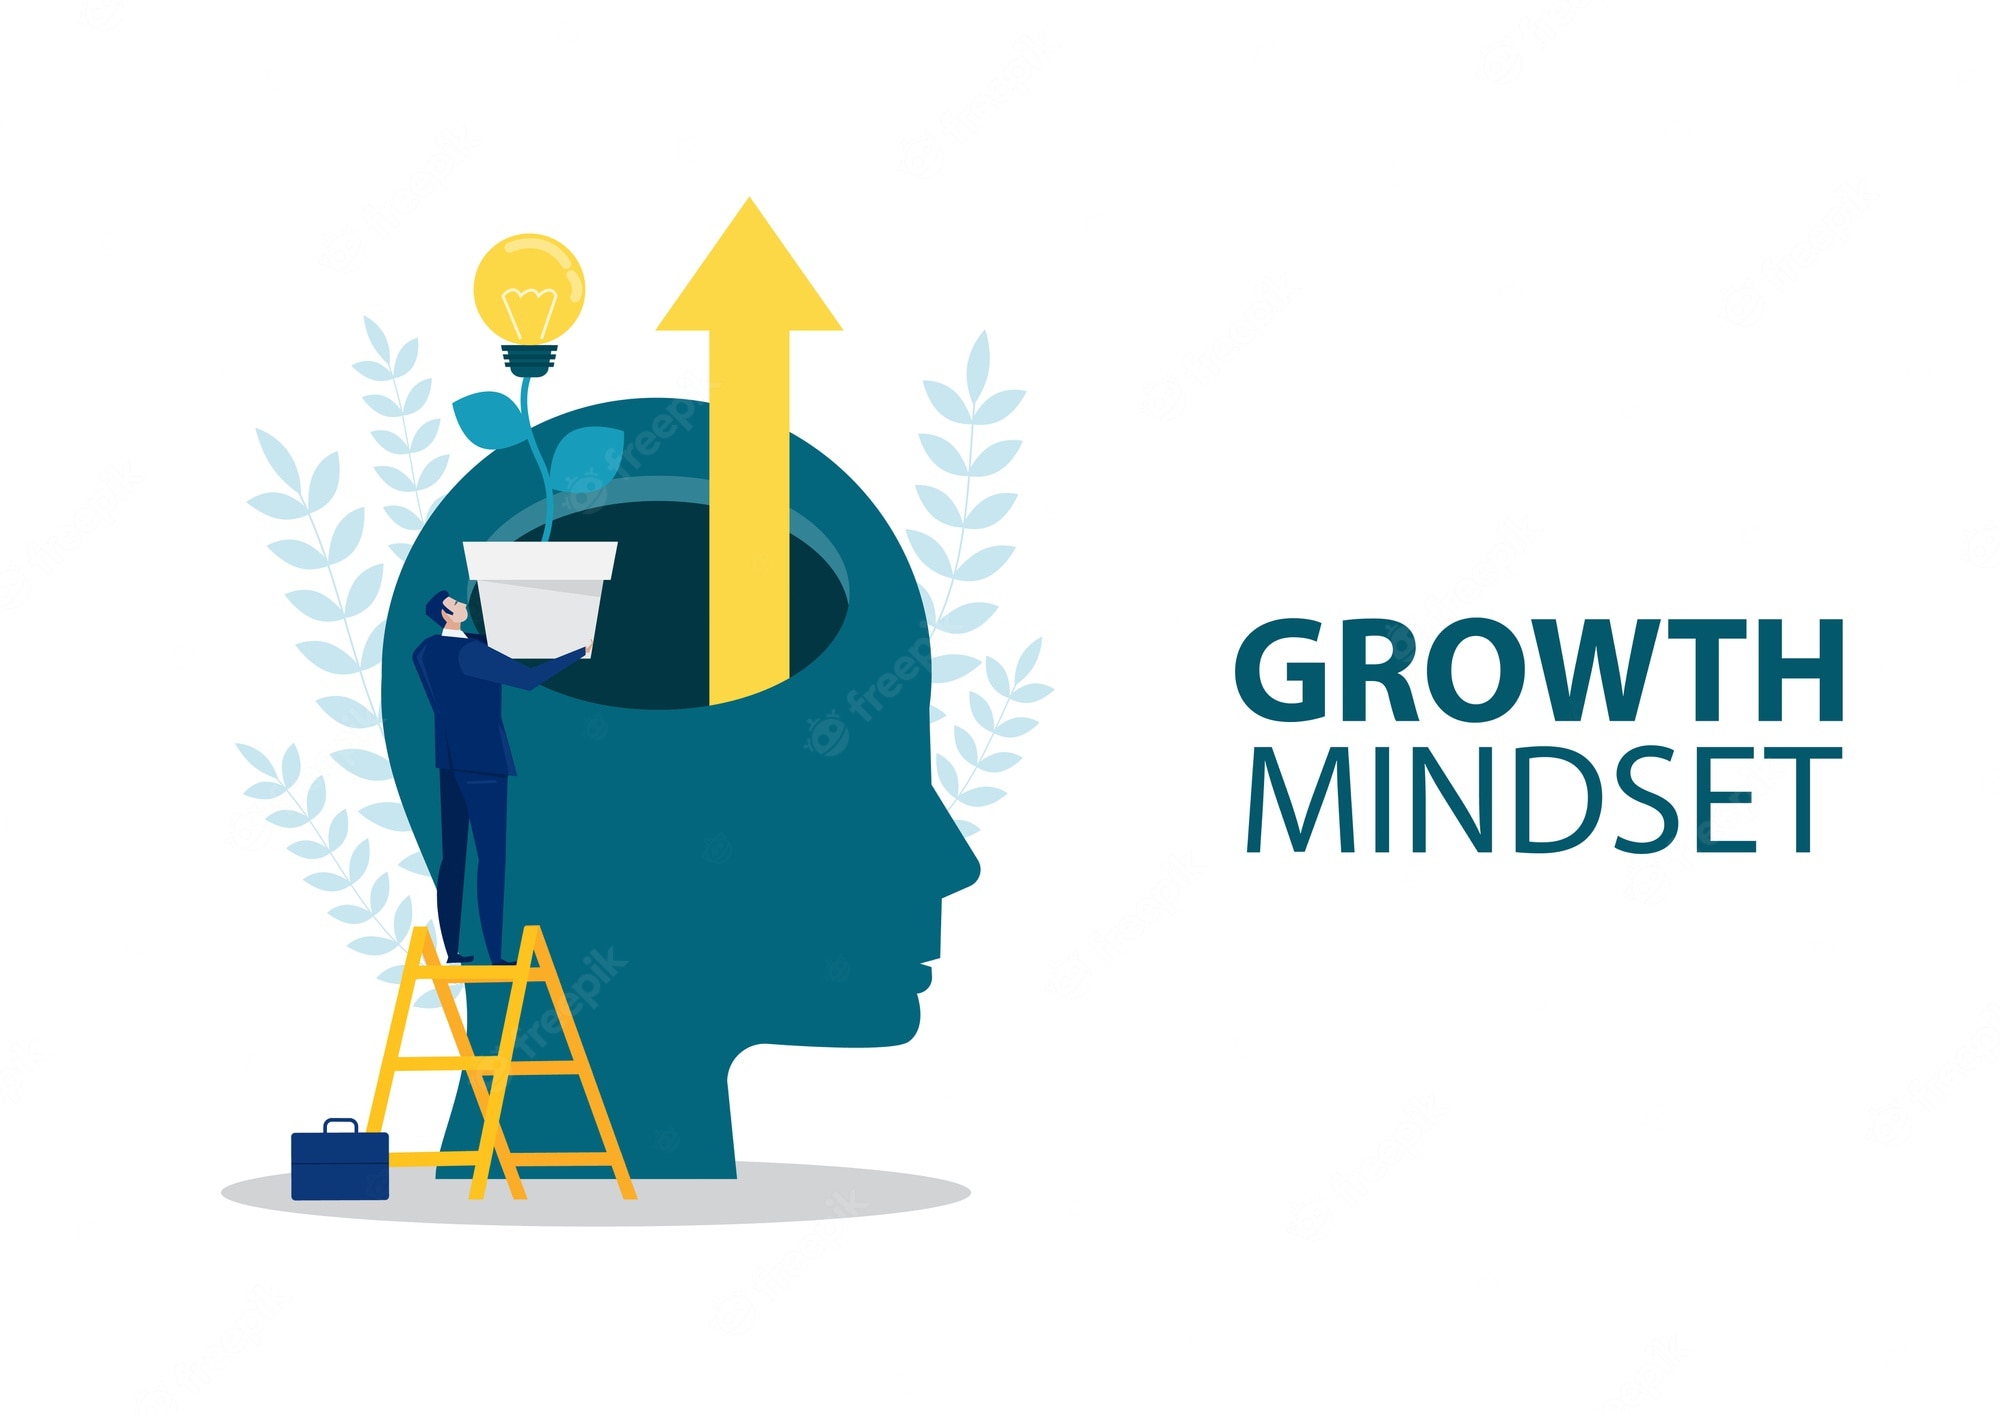 Growth Mindset Image. Free Vectors, & PSD